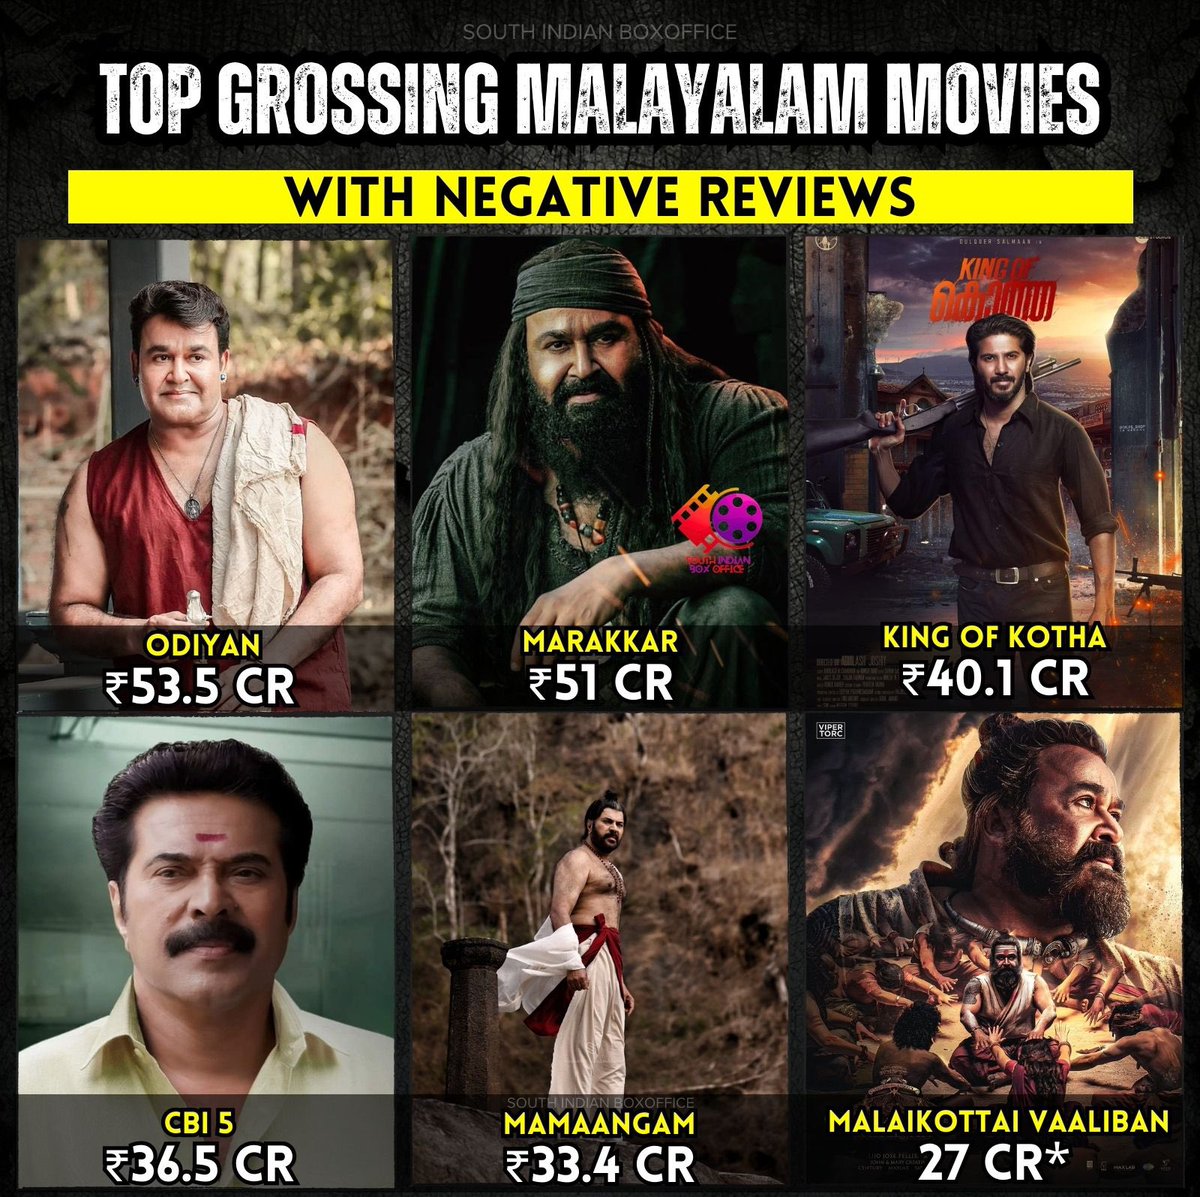 Top Grossing Malayalam Movies with Negative Reviews 

1 #Odiyan - ₹53.5 Cr 
2 #Marakkar - ₹51 Cr 
3 #KingOfKotha - ₹40.1 Cr
4 #CBI5 - ₹36.5 Cr
5 #Mamaangam - ₹33.4 Cr
6 #MalaikottaiVaaliban - 27 Cr*